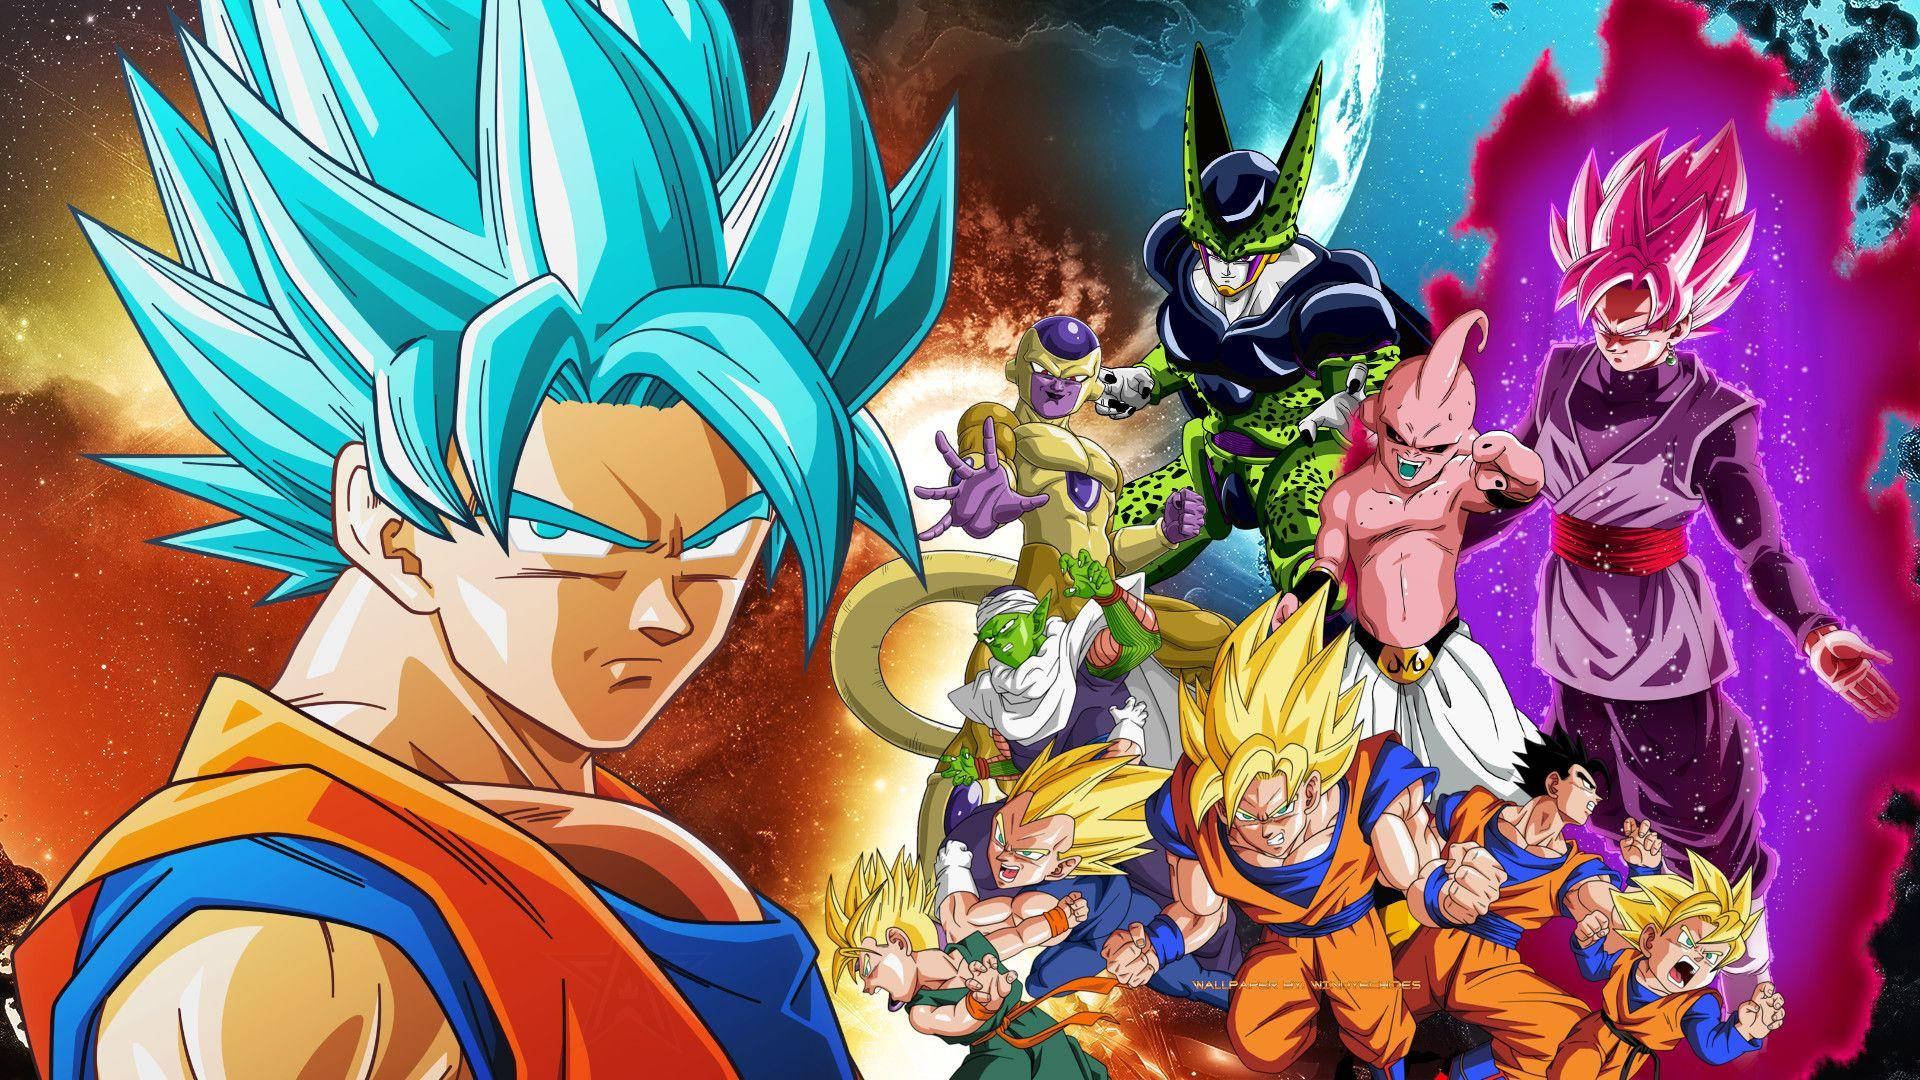 Goku unleashes his power in Dragon Ball Super Wallpaper